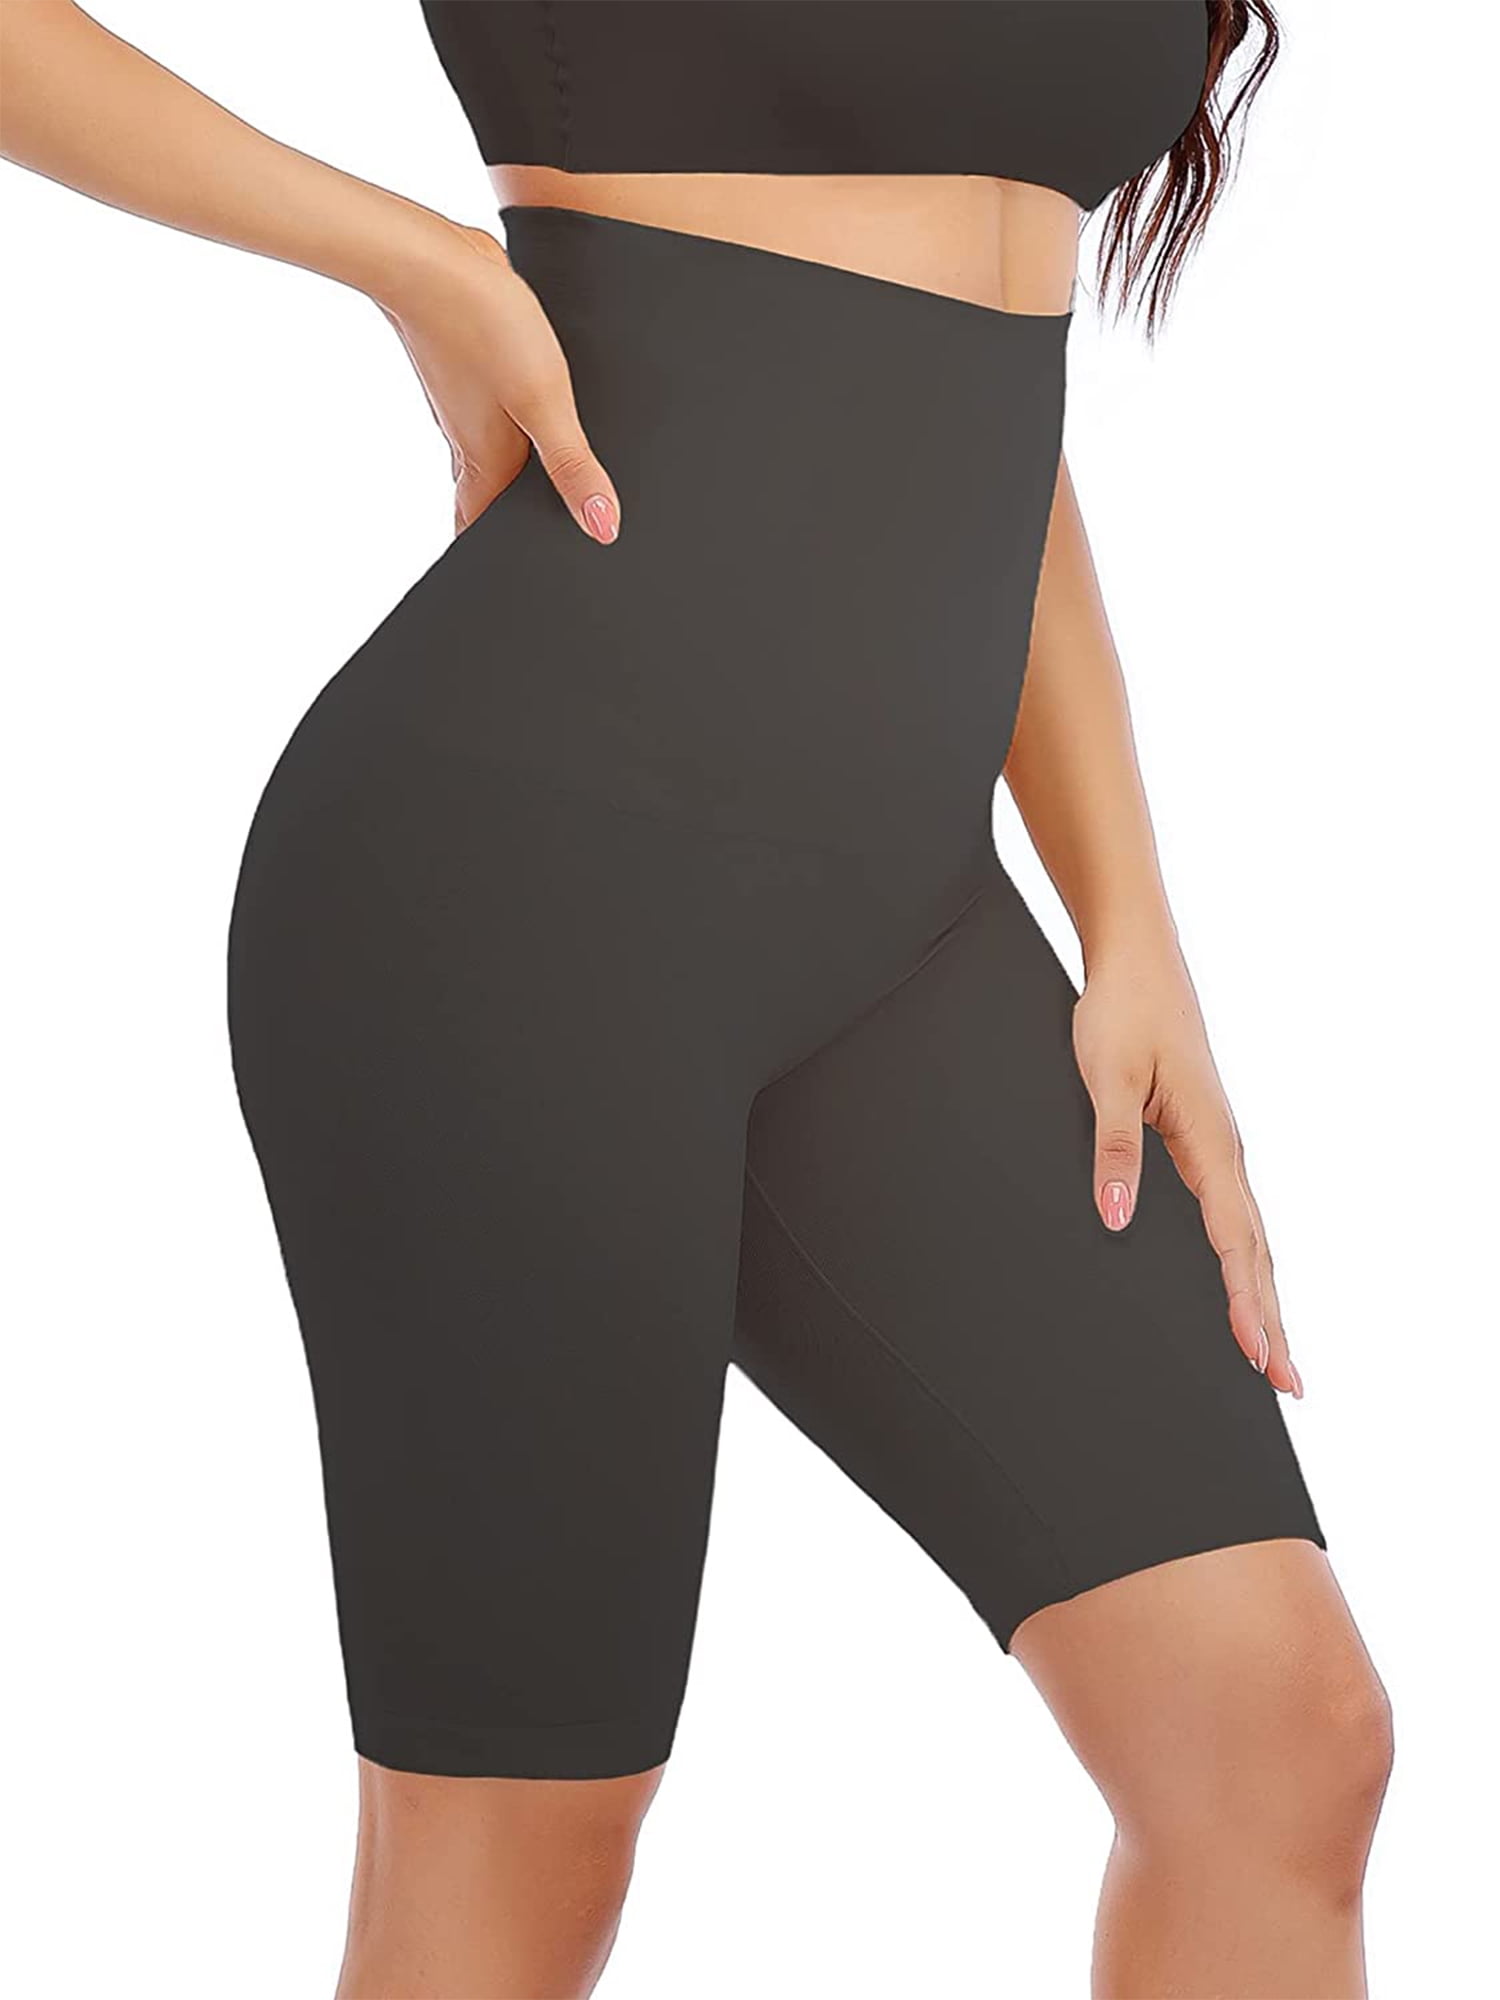 Lilvigor High Waist Women Shaper Thigh Slimmer Tummy Control Shapewear Butt  Lifting Seamless Shorts Plus Size 